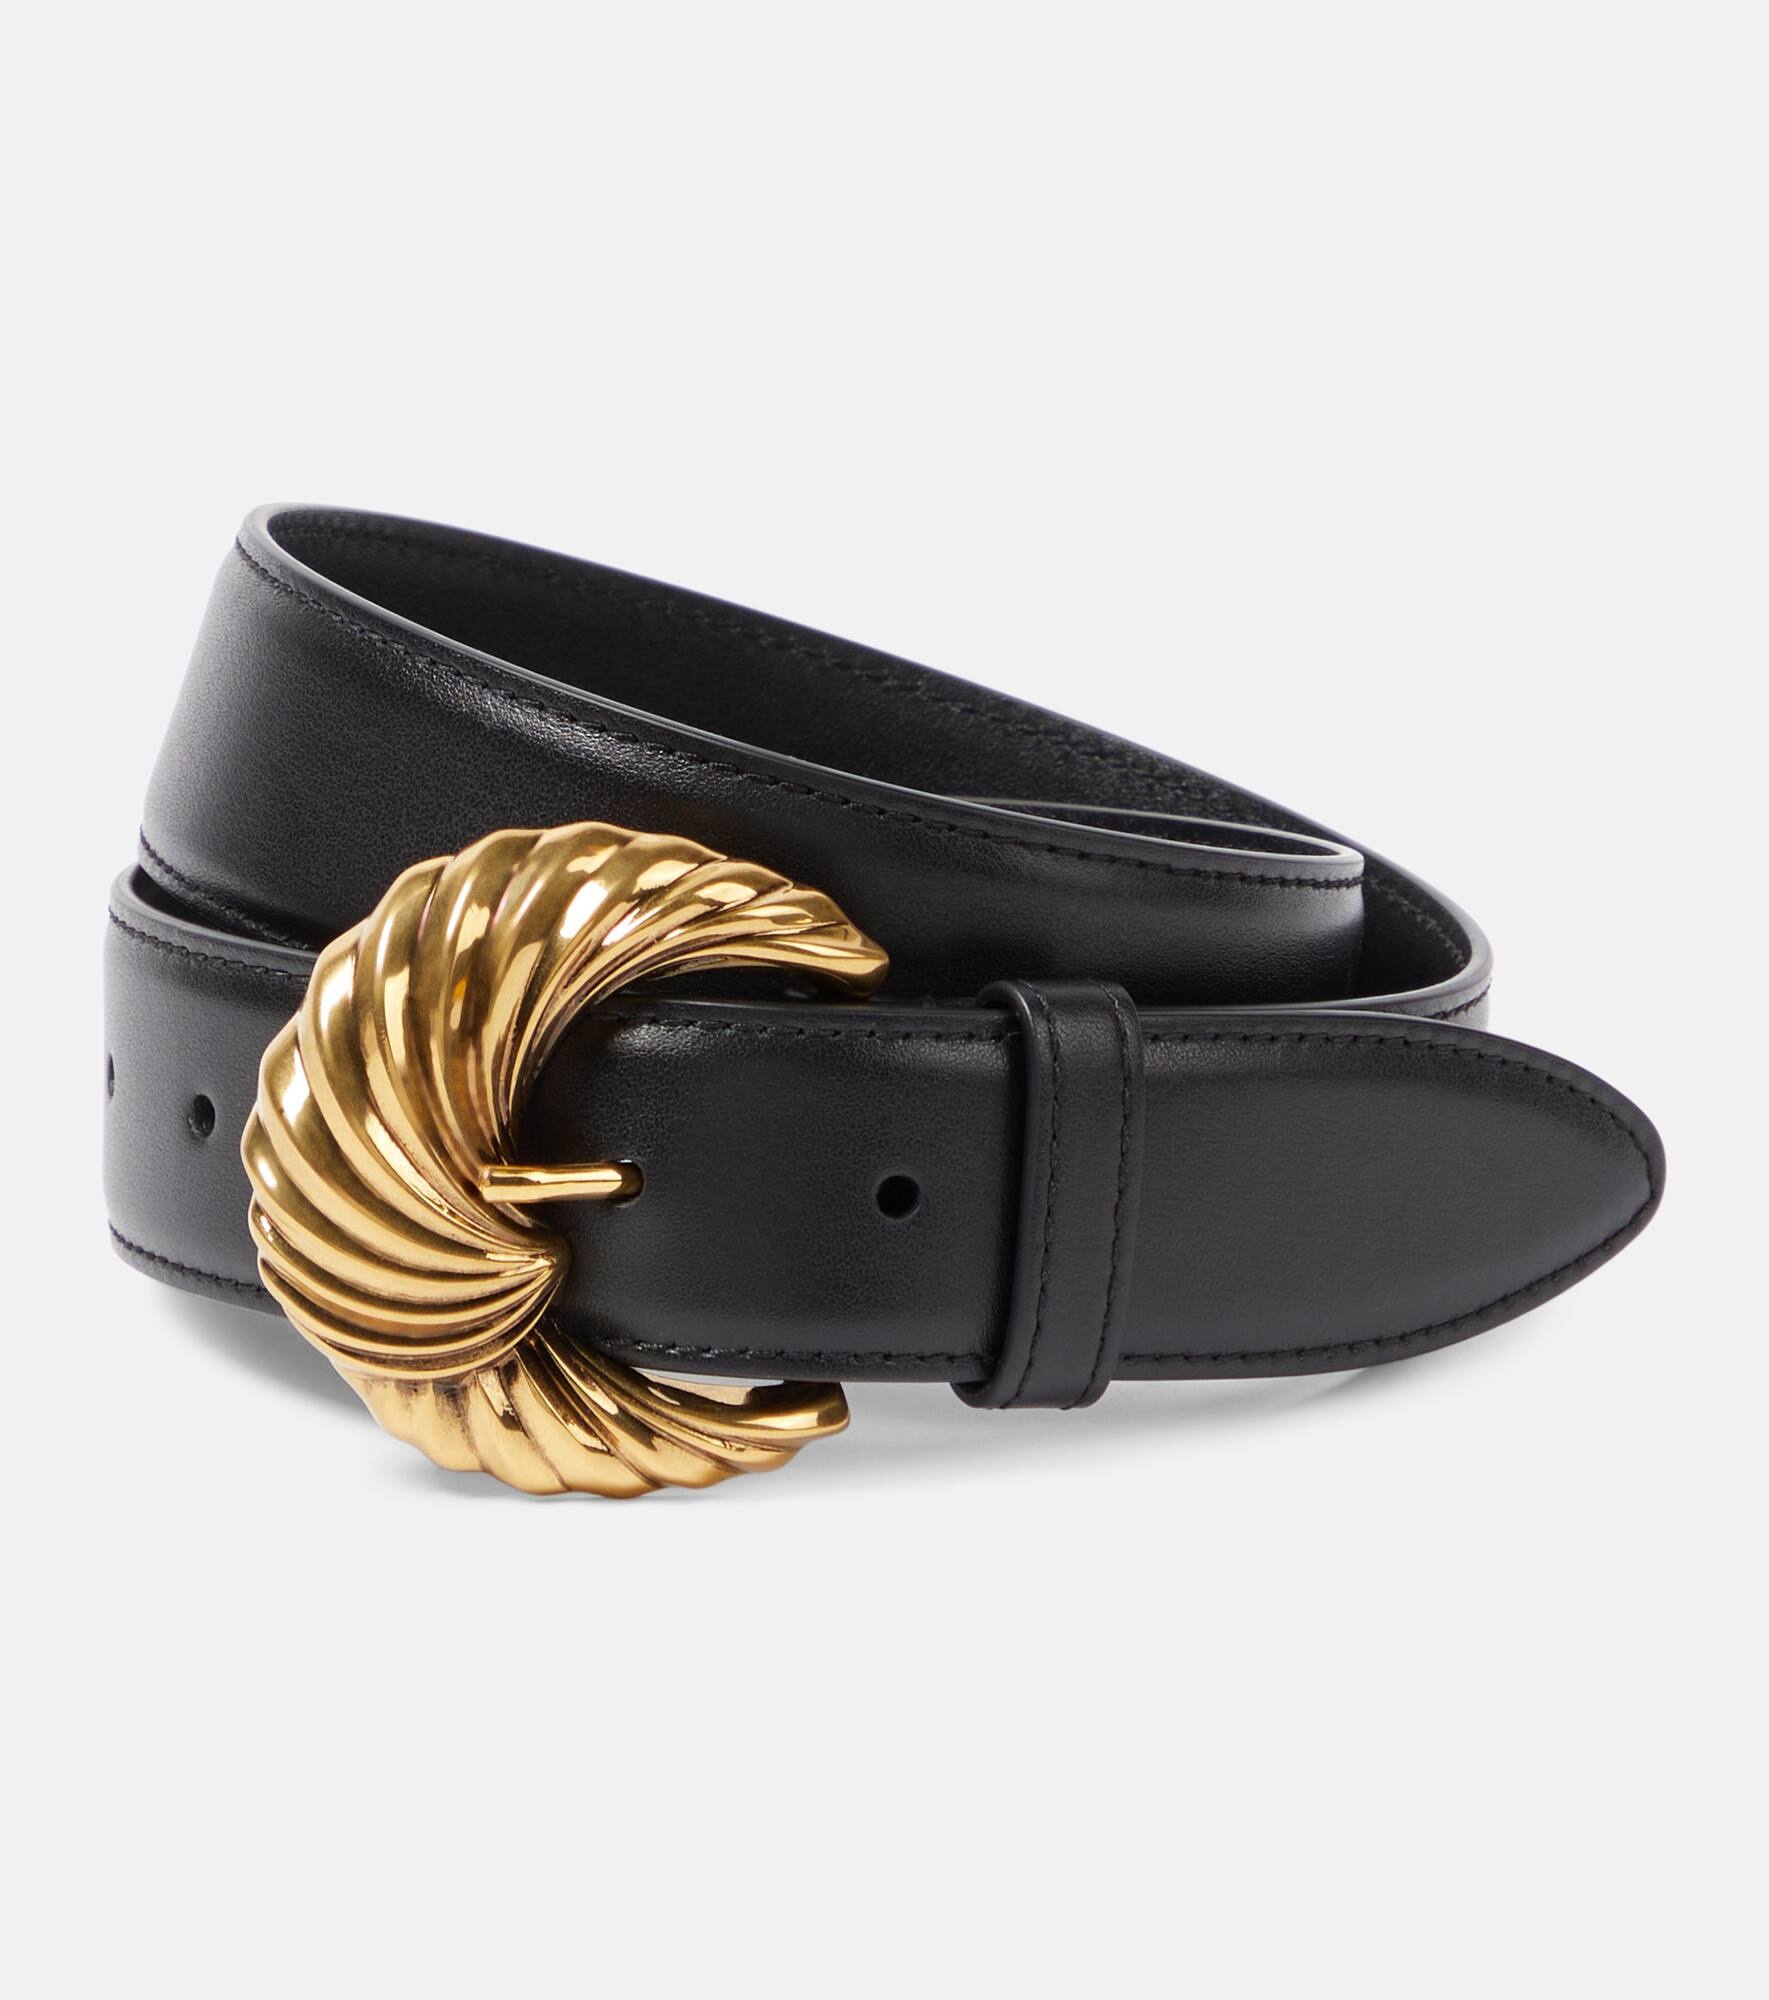 Paisley leather belt - 1